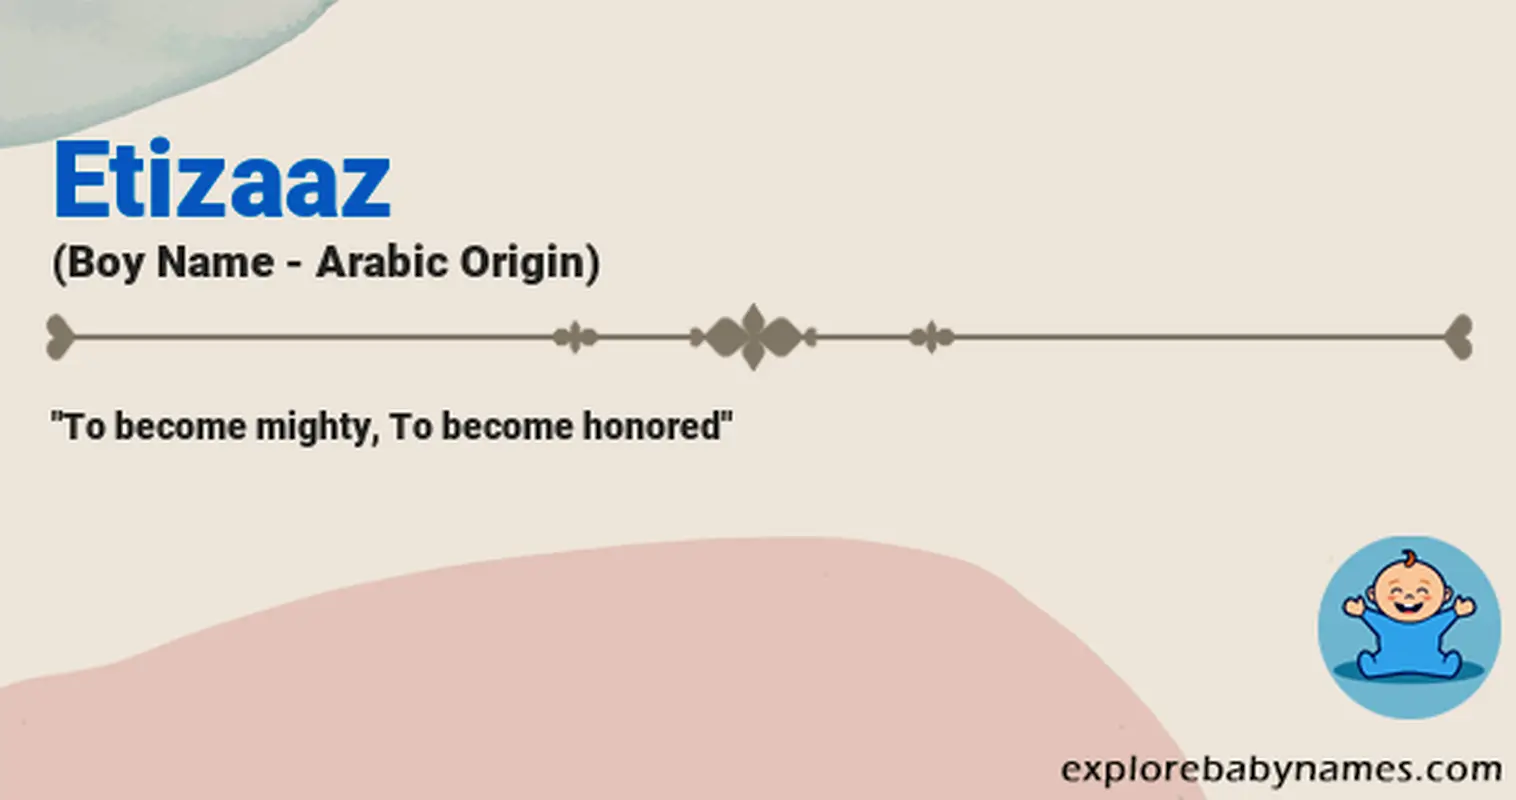 Meaning of Etizaaz